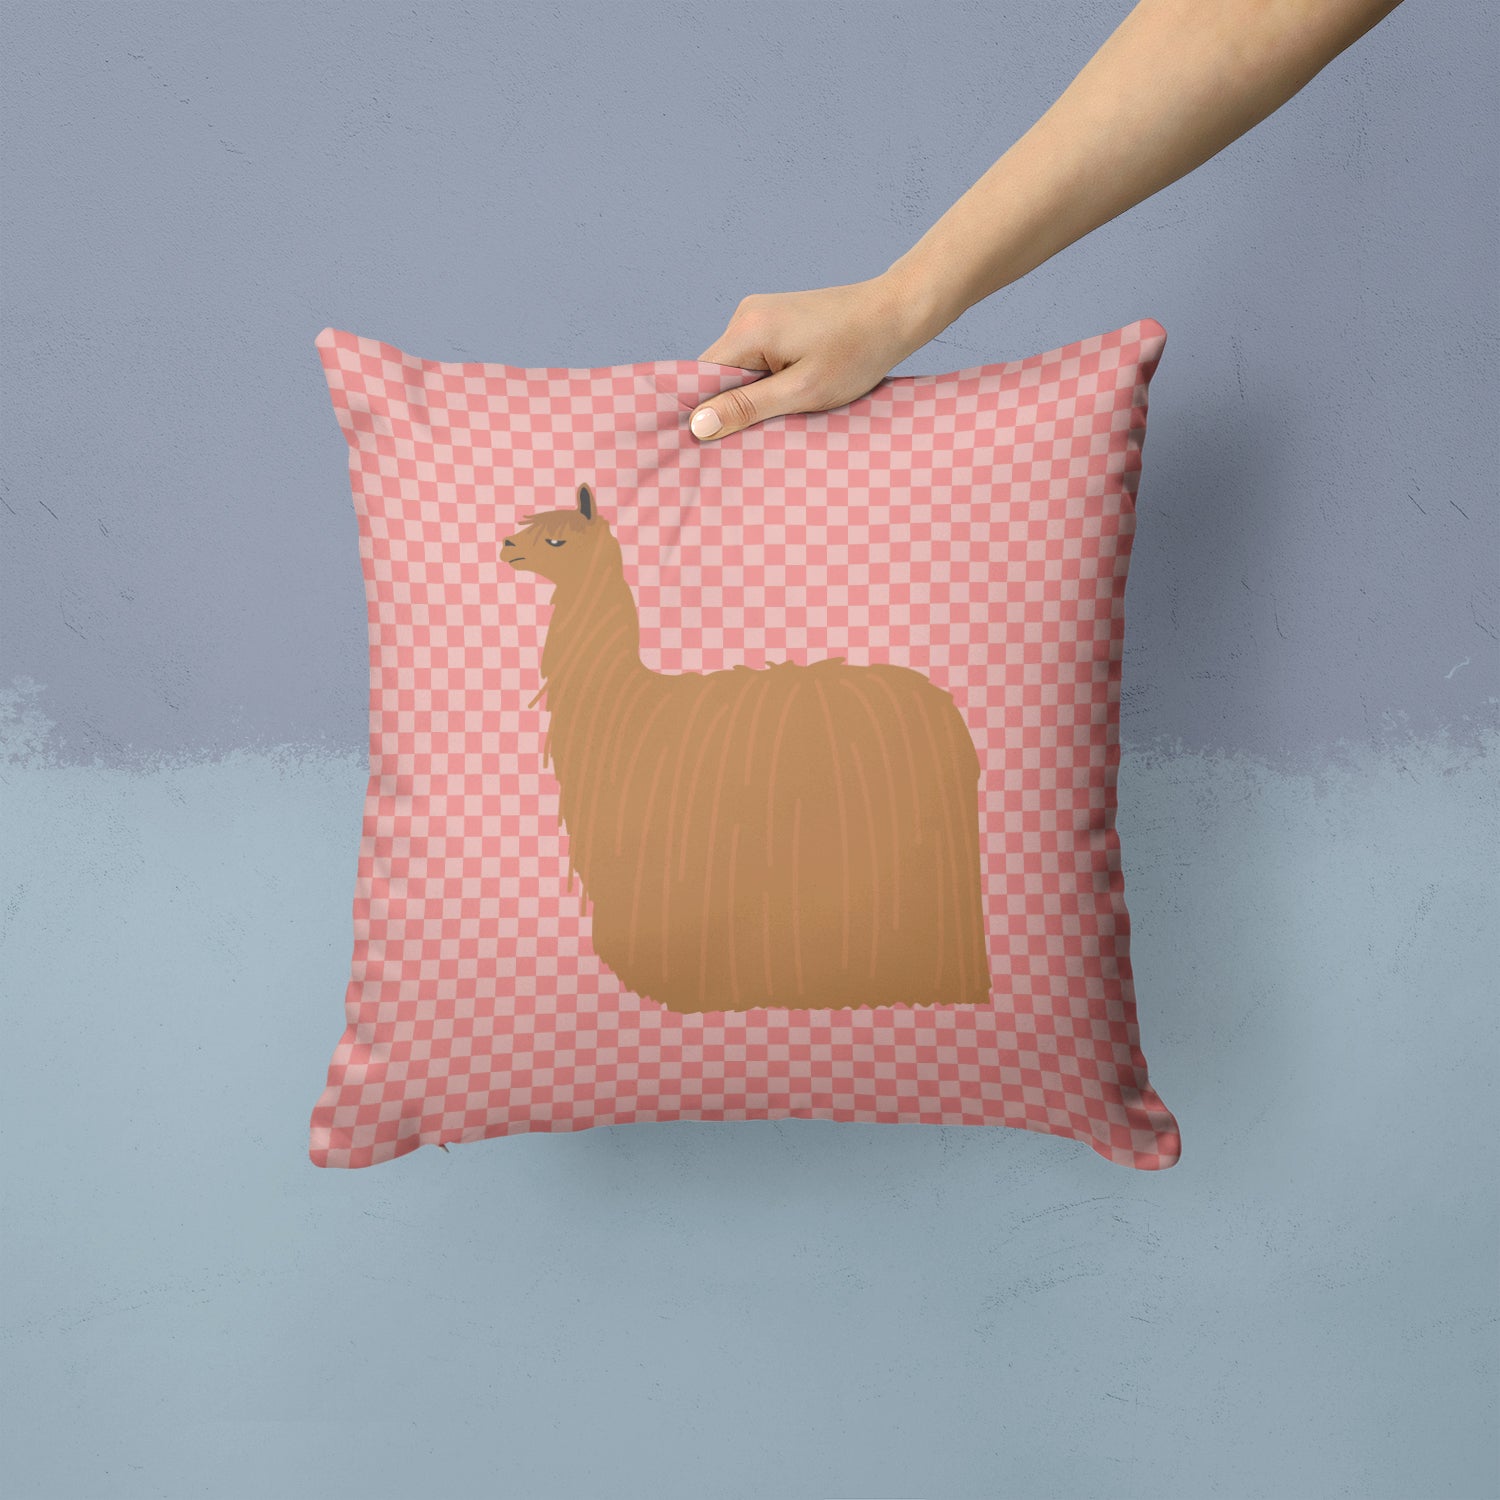 Alpaca Suri Pink Check Fabric Decorative Pillow BB7920PW1414 - the-store.com